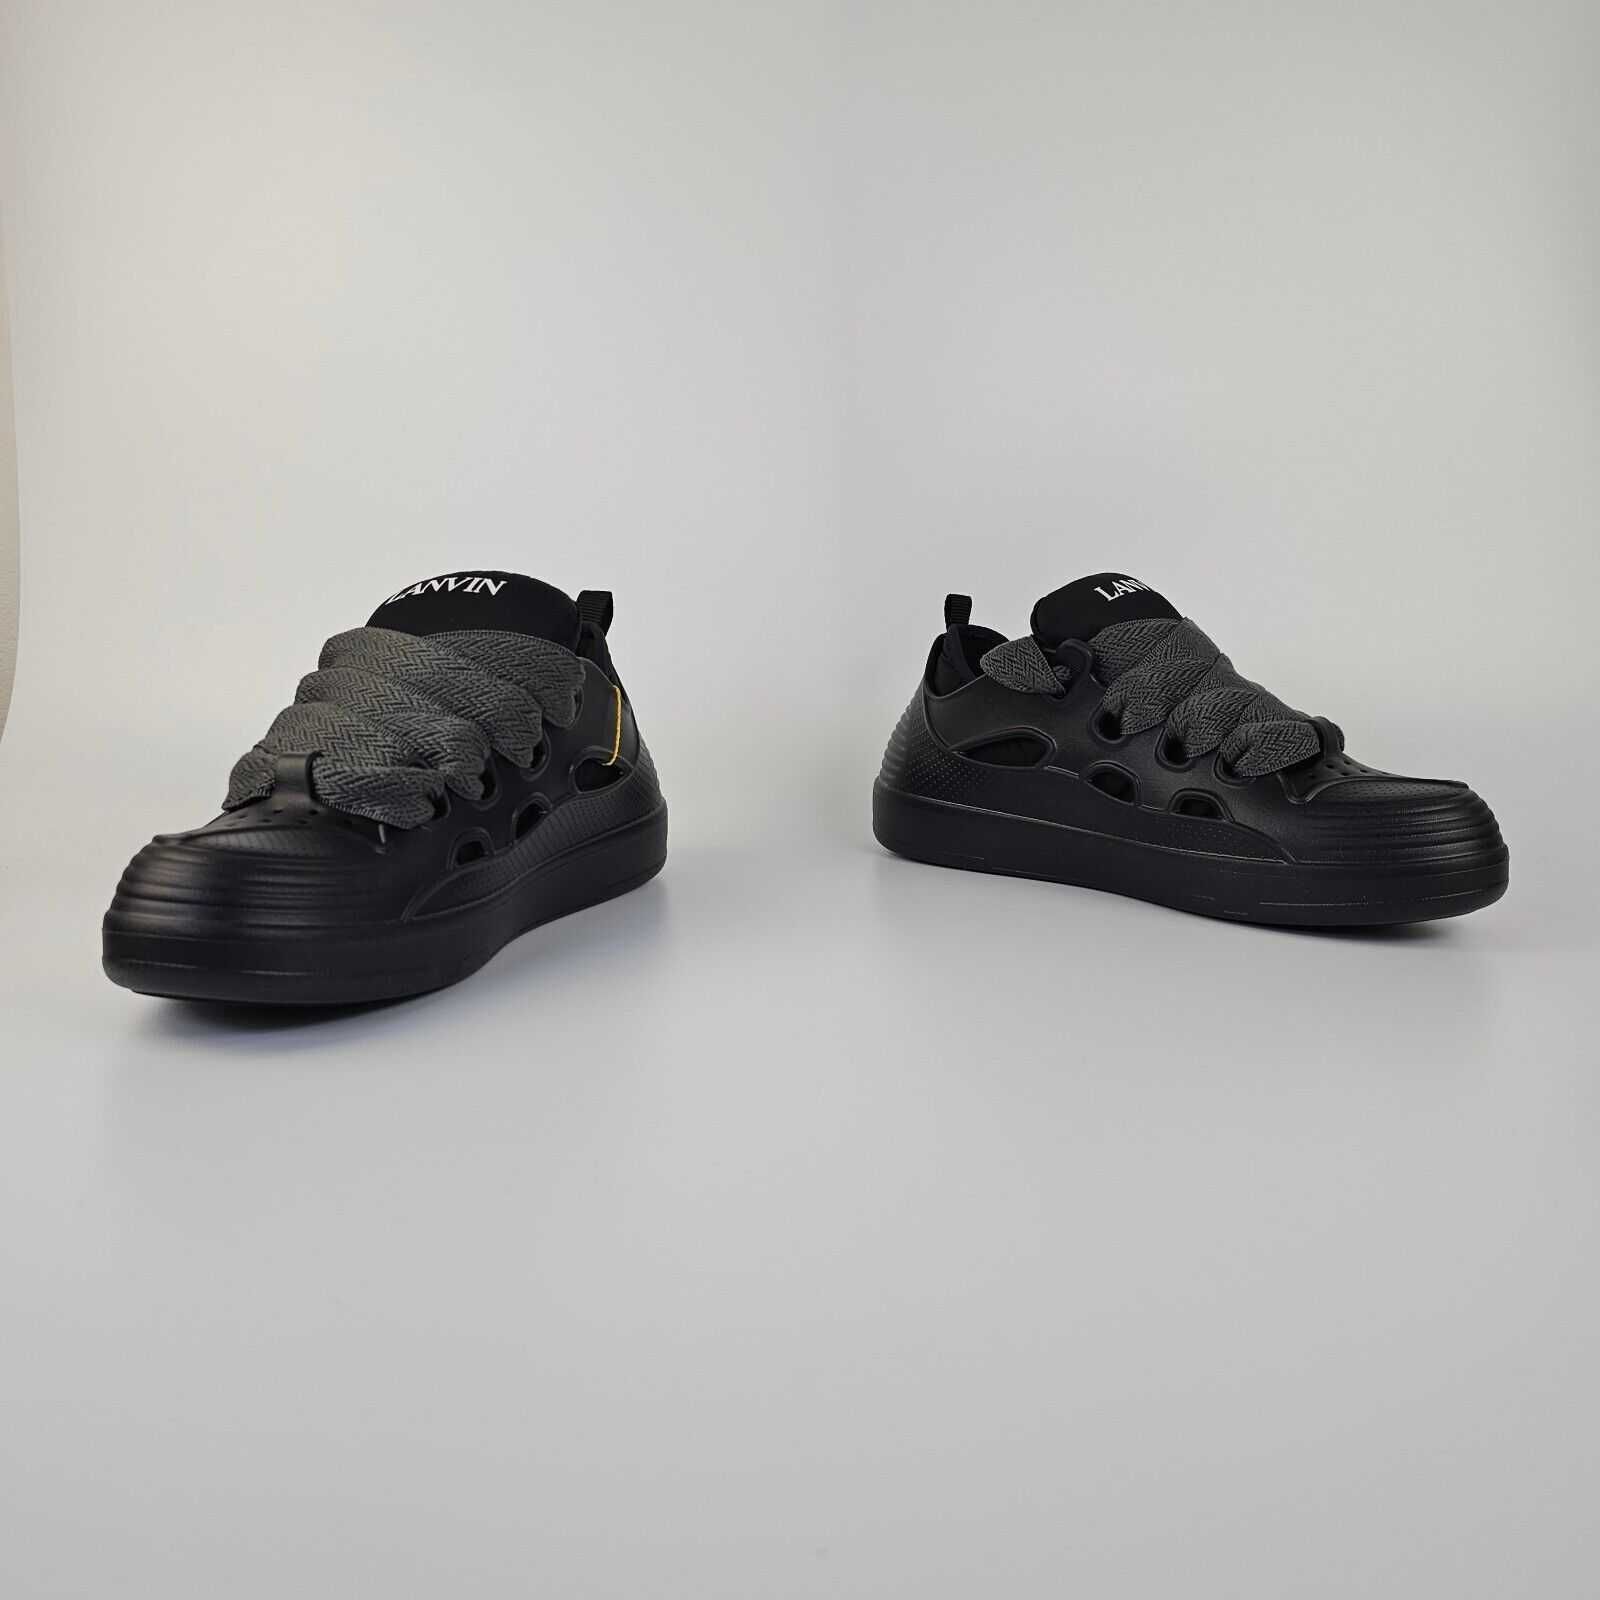 Adidasi Lanvin Curb Black